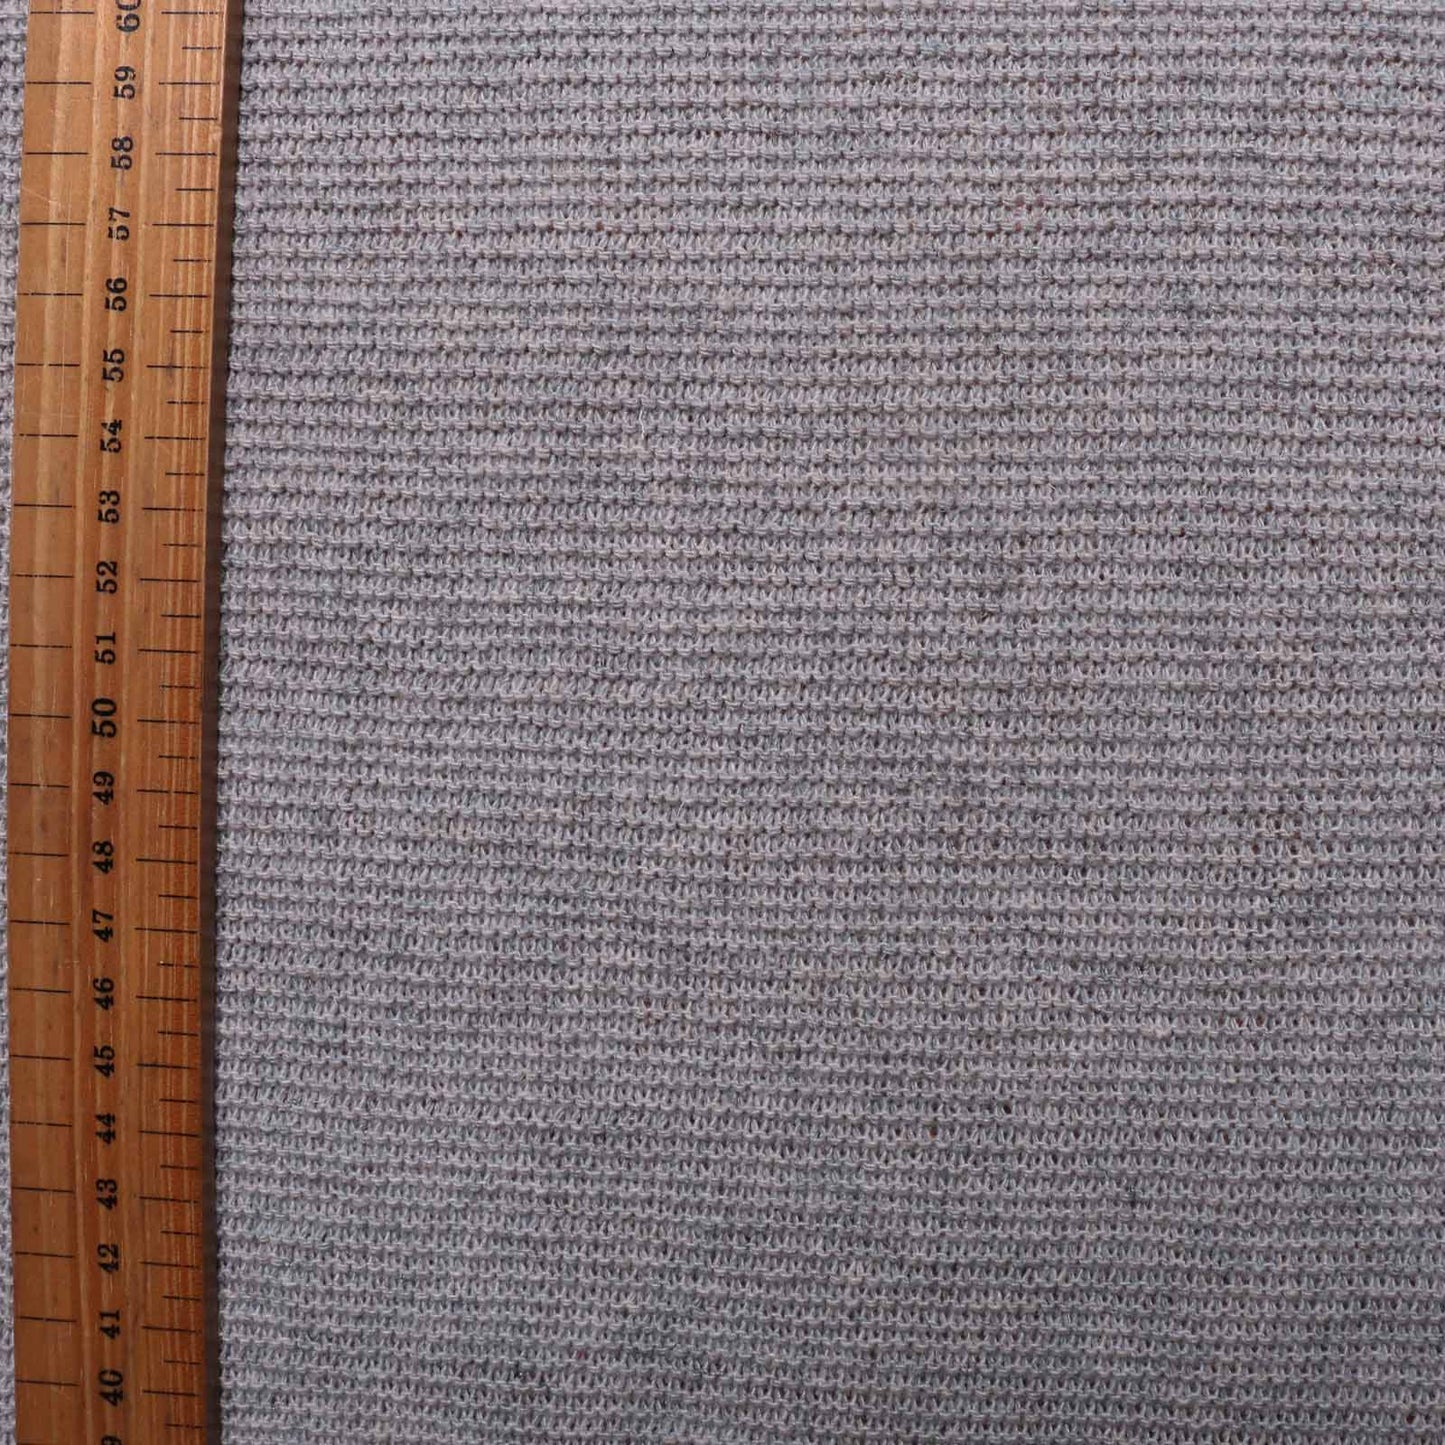 metre wool jersey purl knit dress fabric pale grey coloured